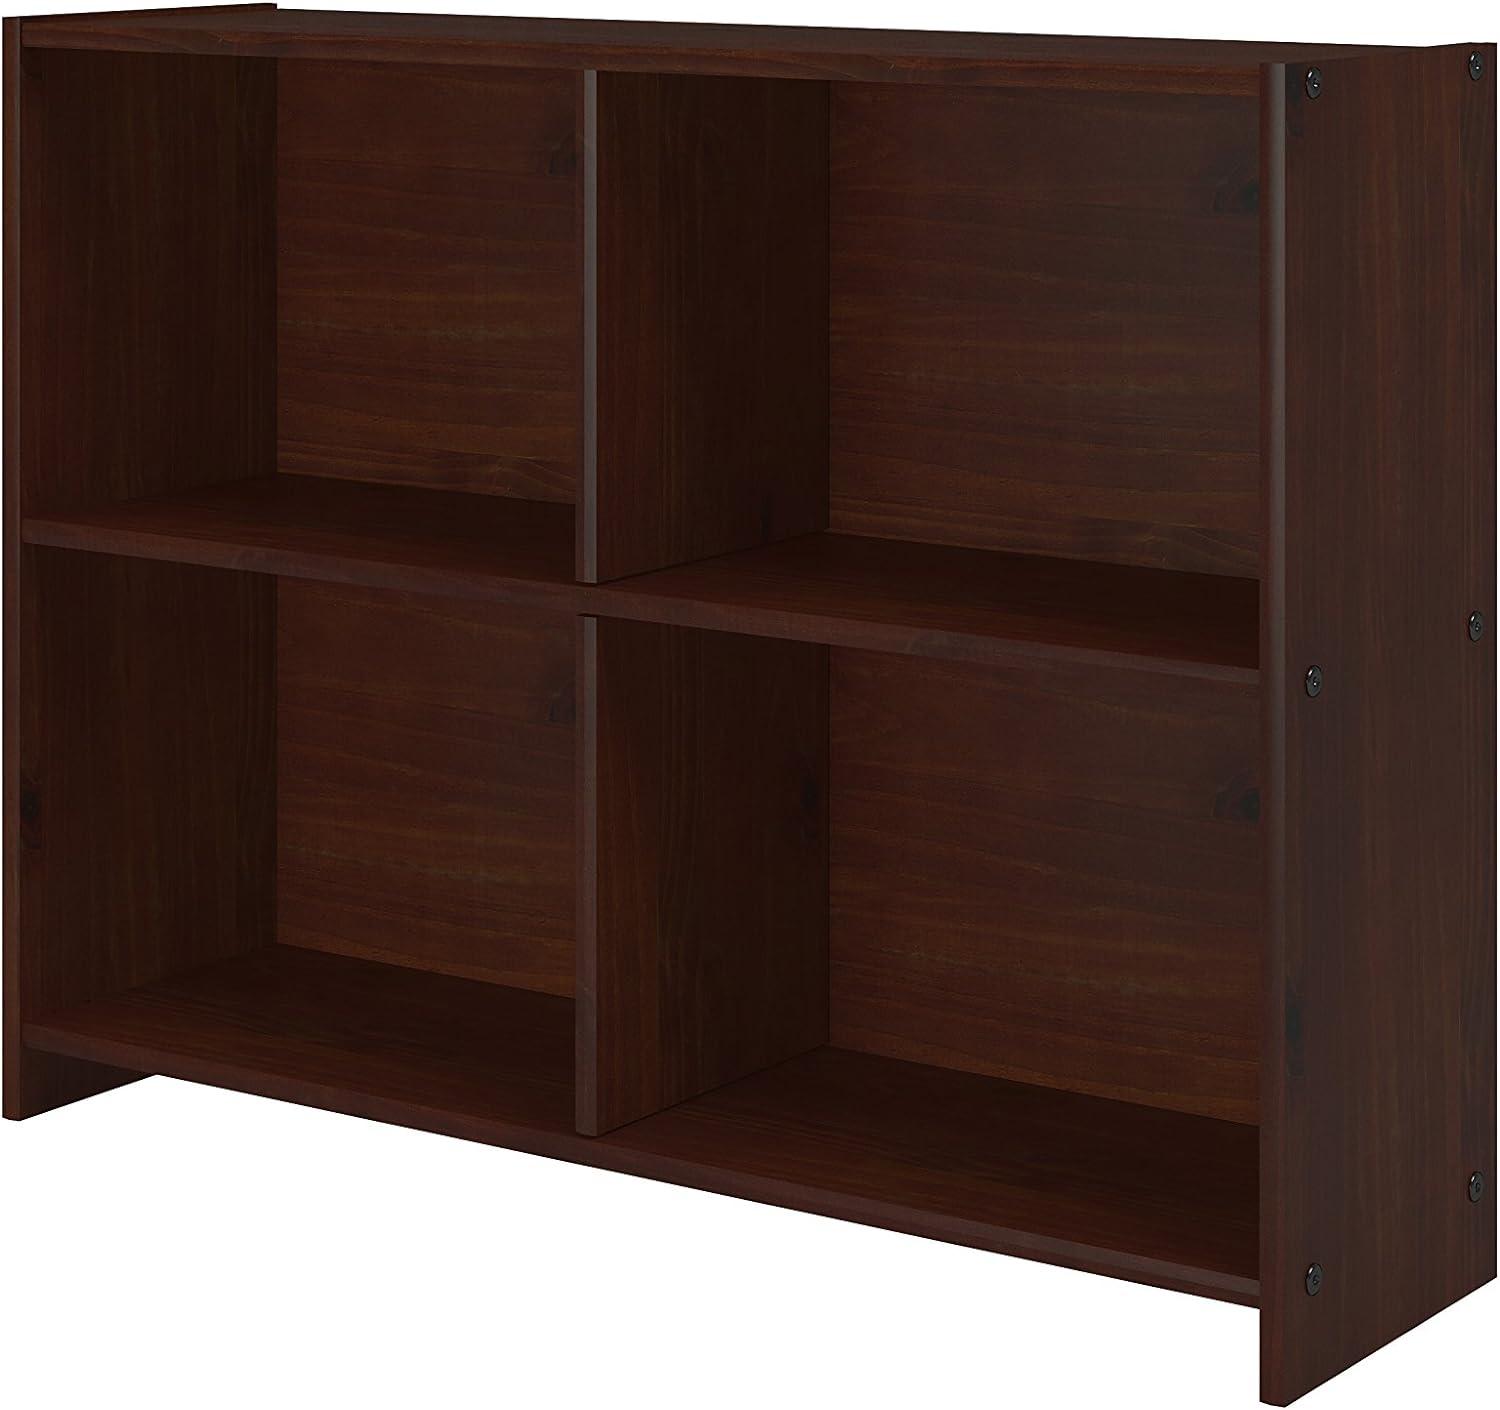 Donco Kids Contemporary Cappuccino Bookcase for Bedroom Storage